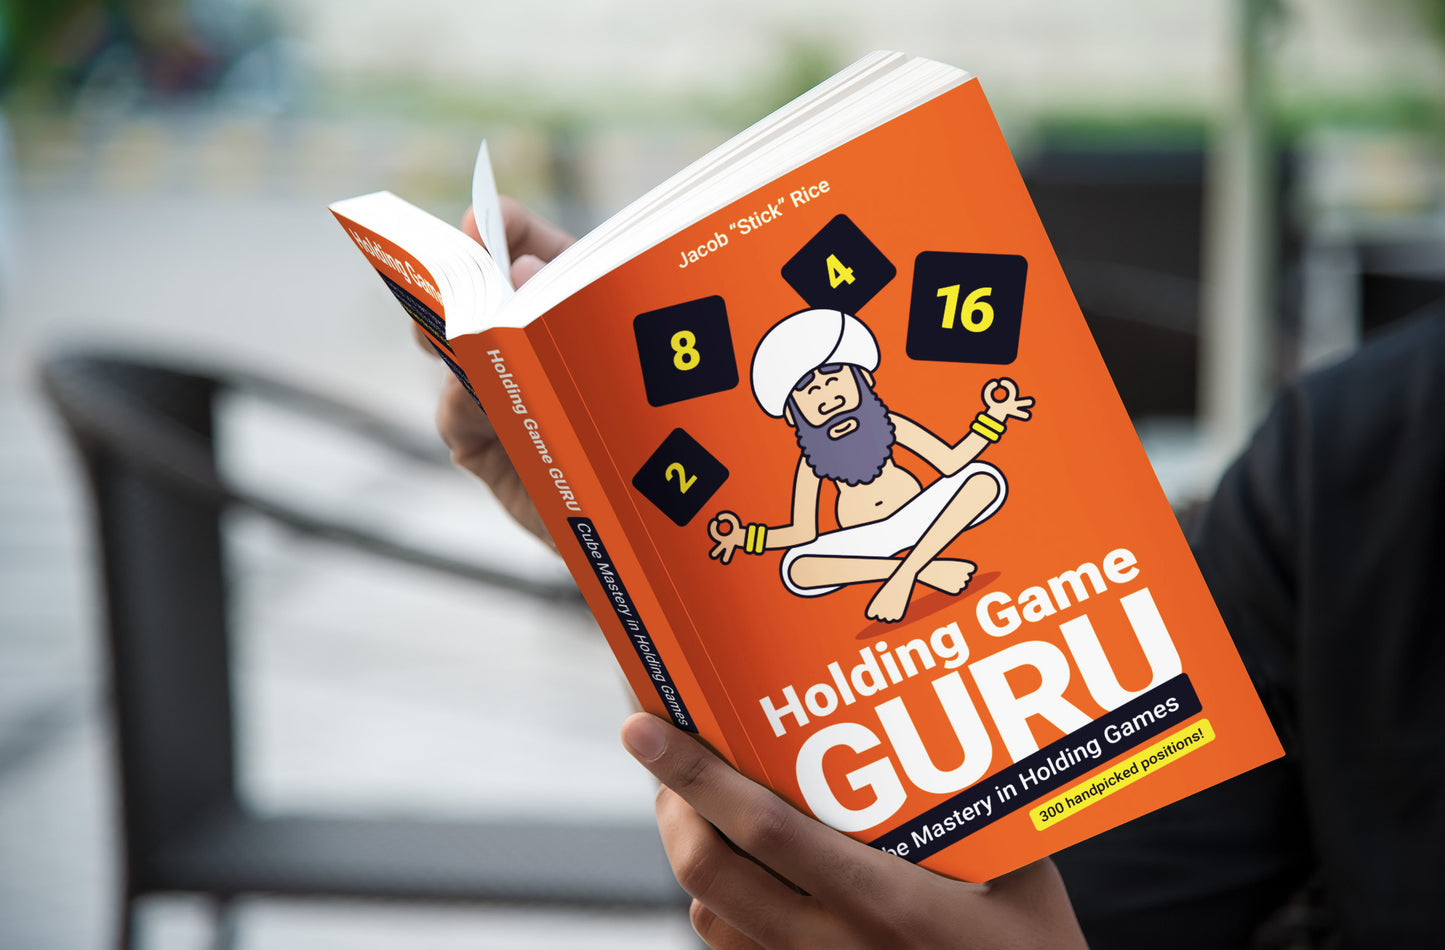 Holding Game Guru, by Jacob "Stick" Rice - Backgammon Galaxy Book